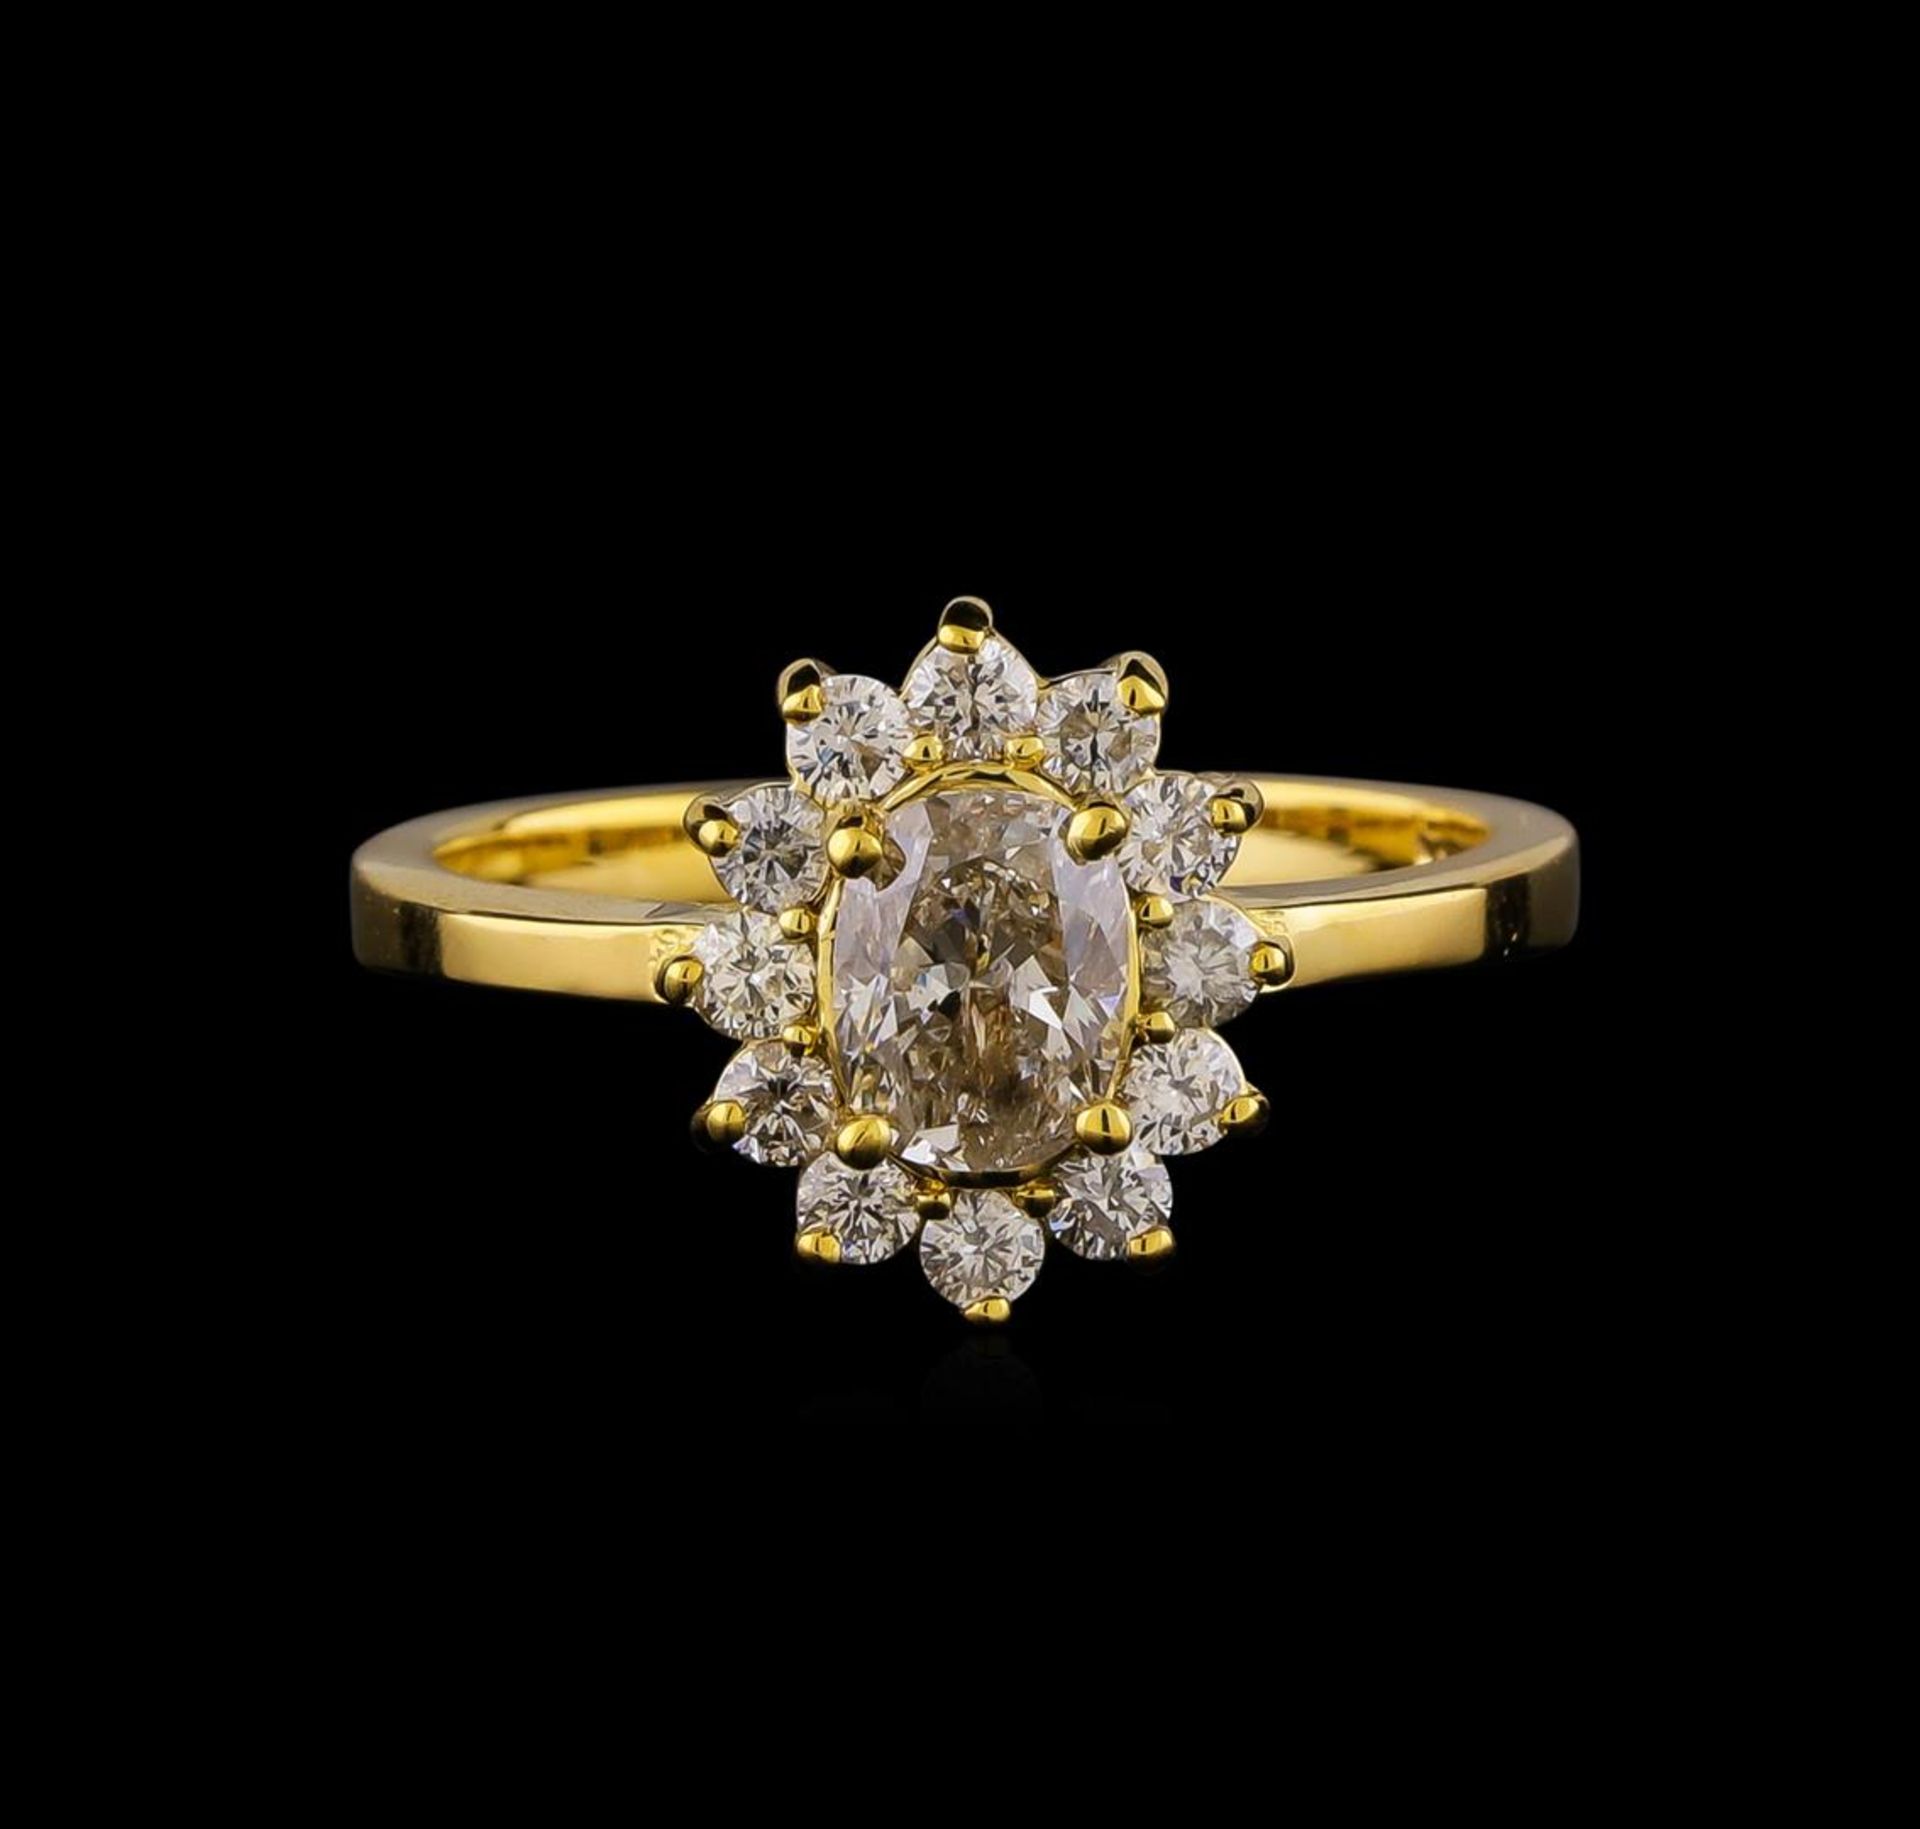 0.95 ctw Diamond Ring - 14KT Yellow Gold - Image 2 of 4